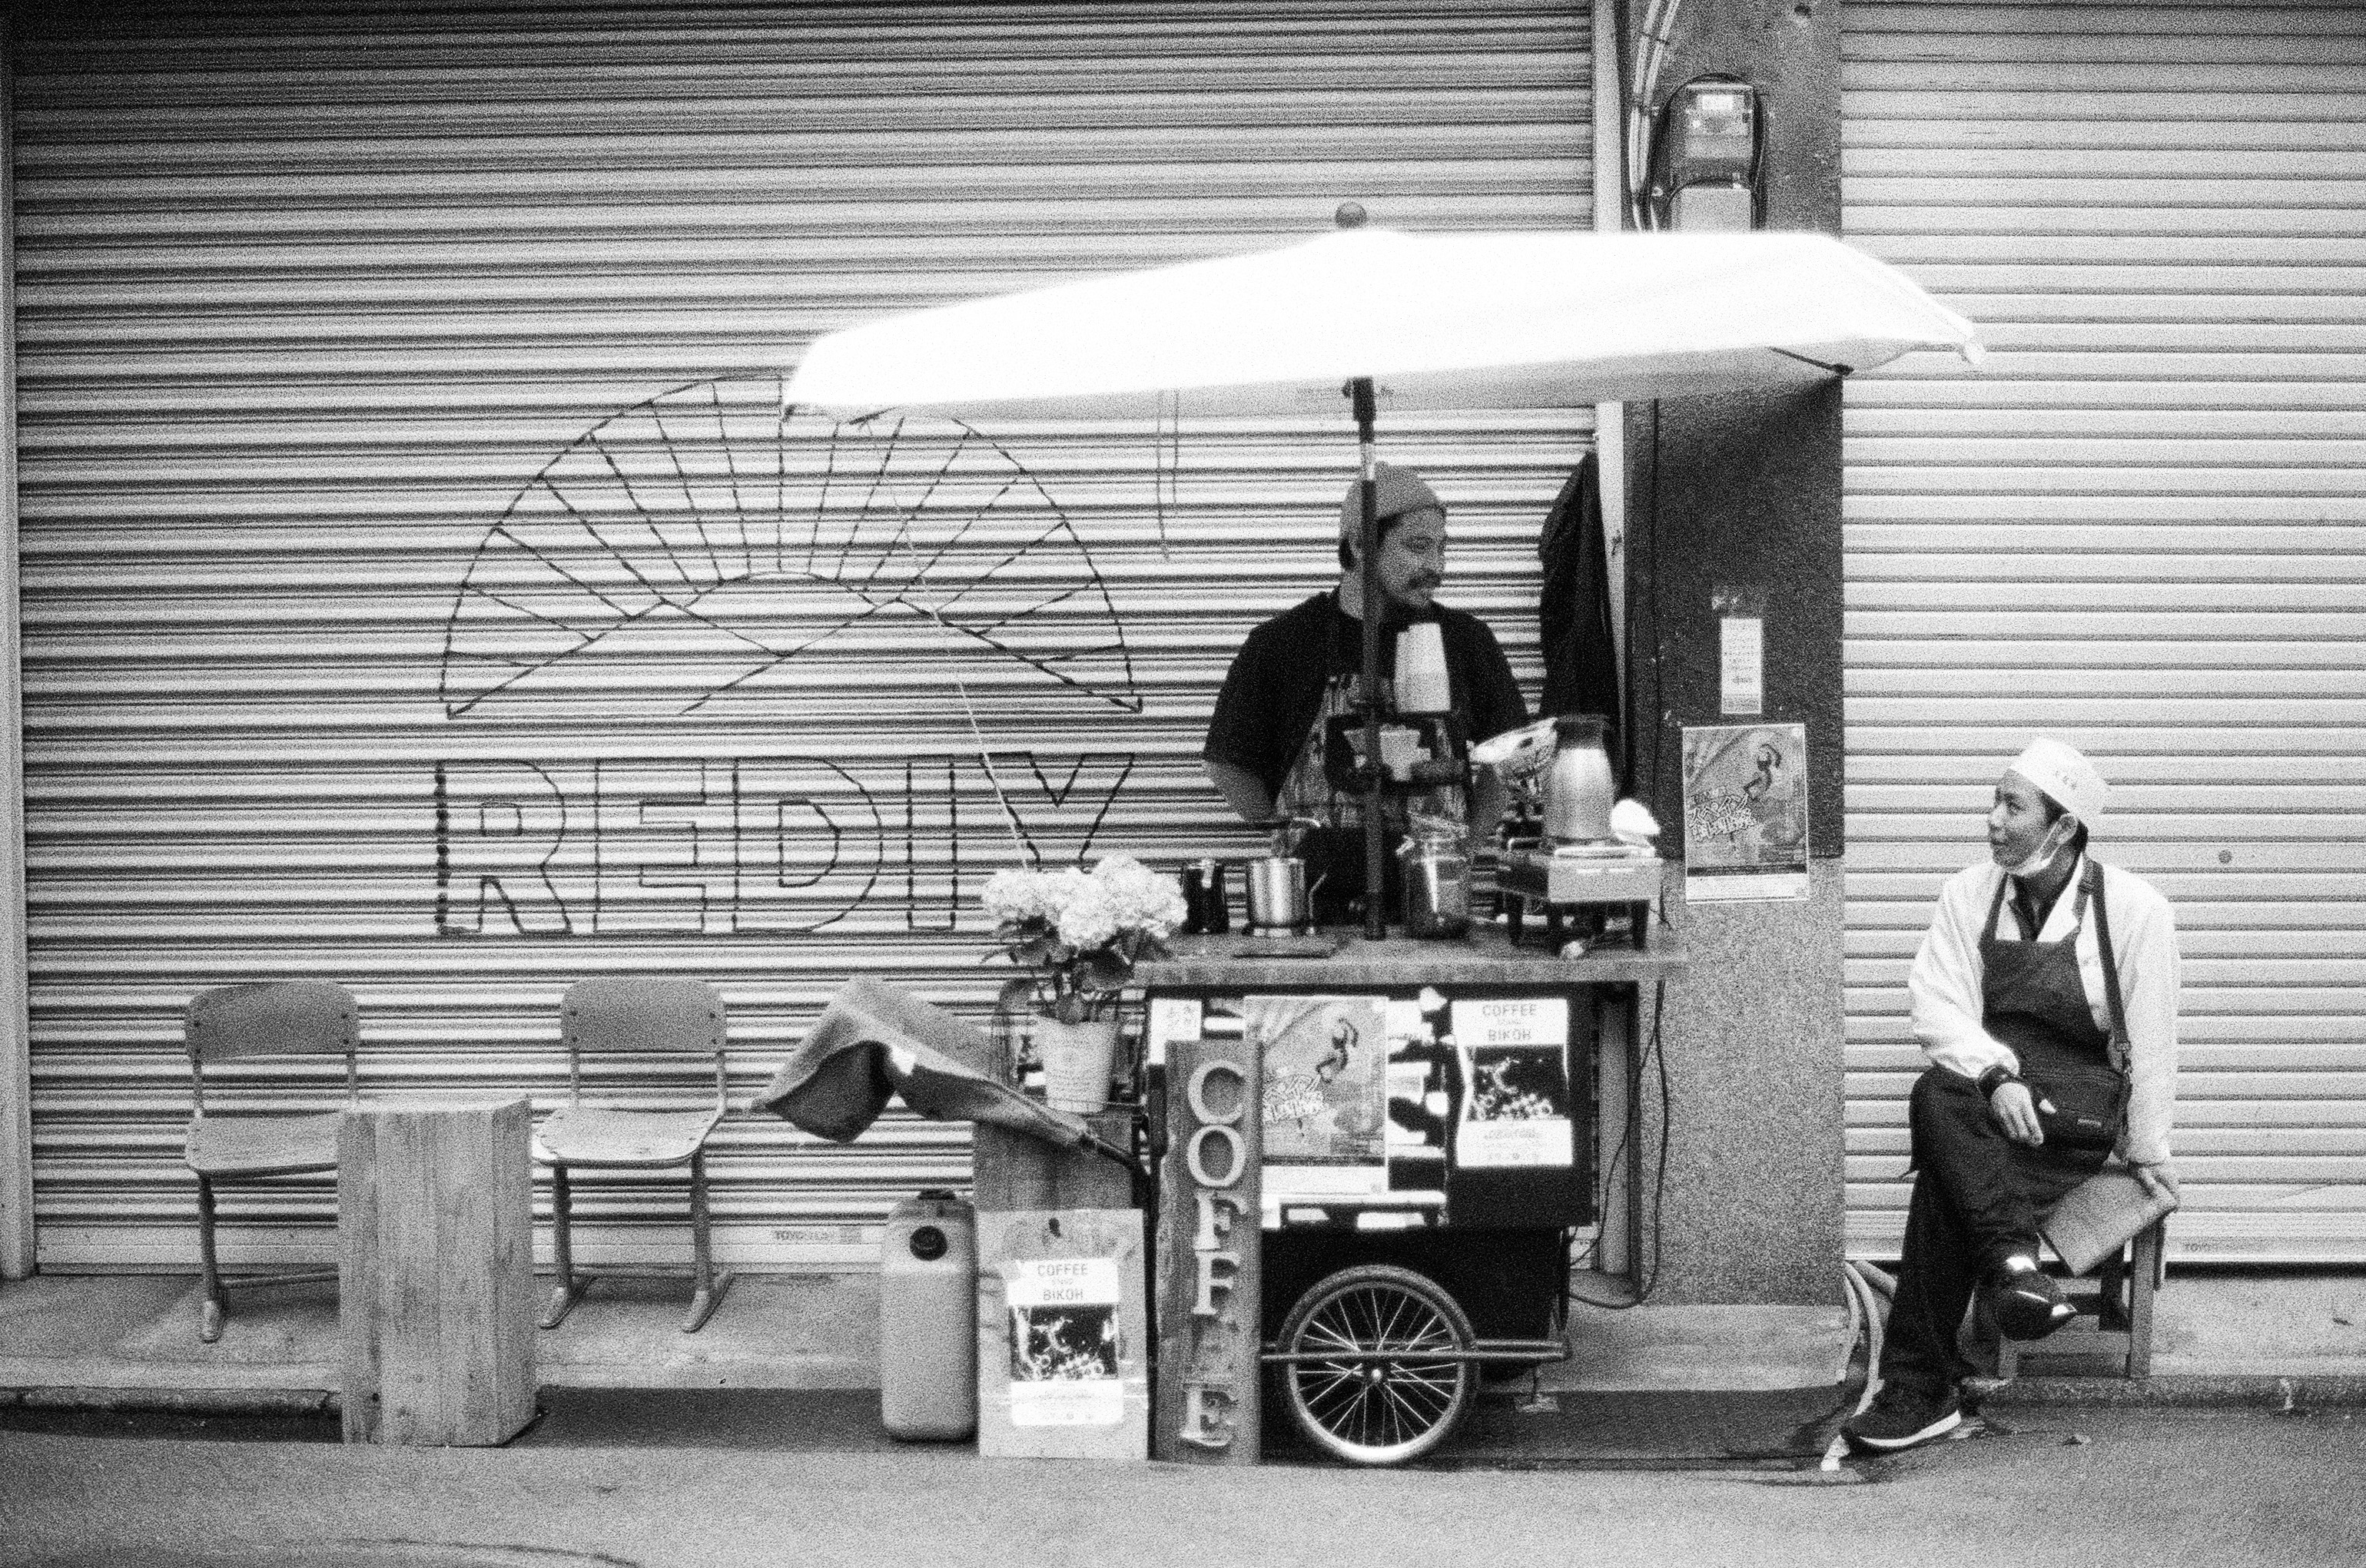 Kyoto - Street side coffee vendor.